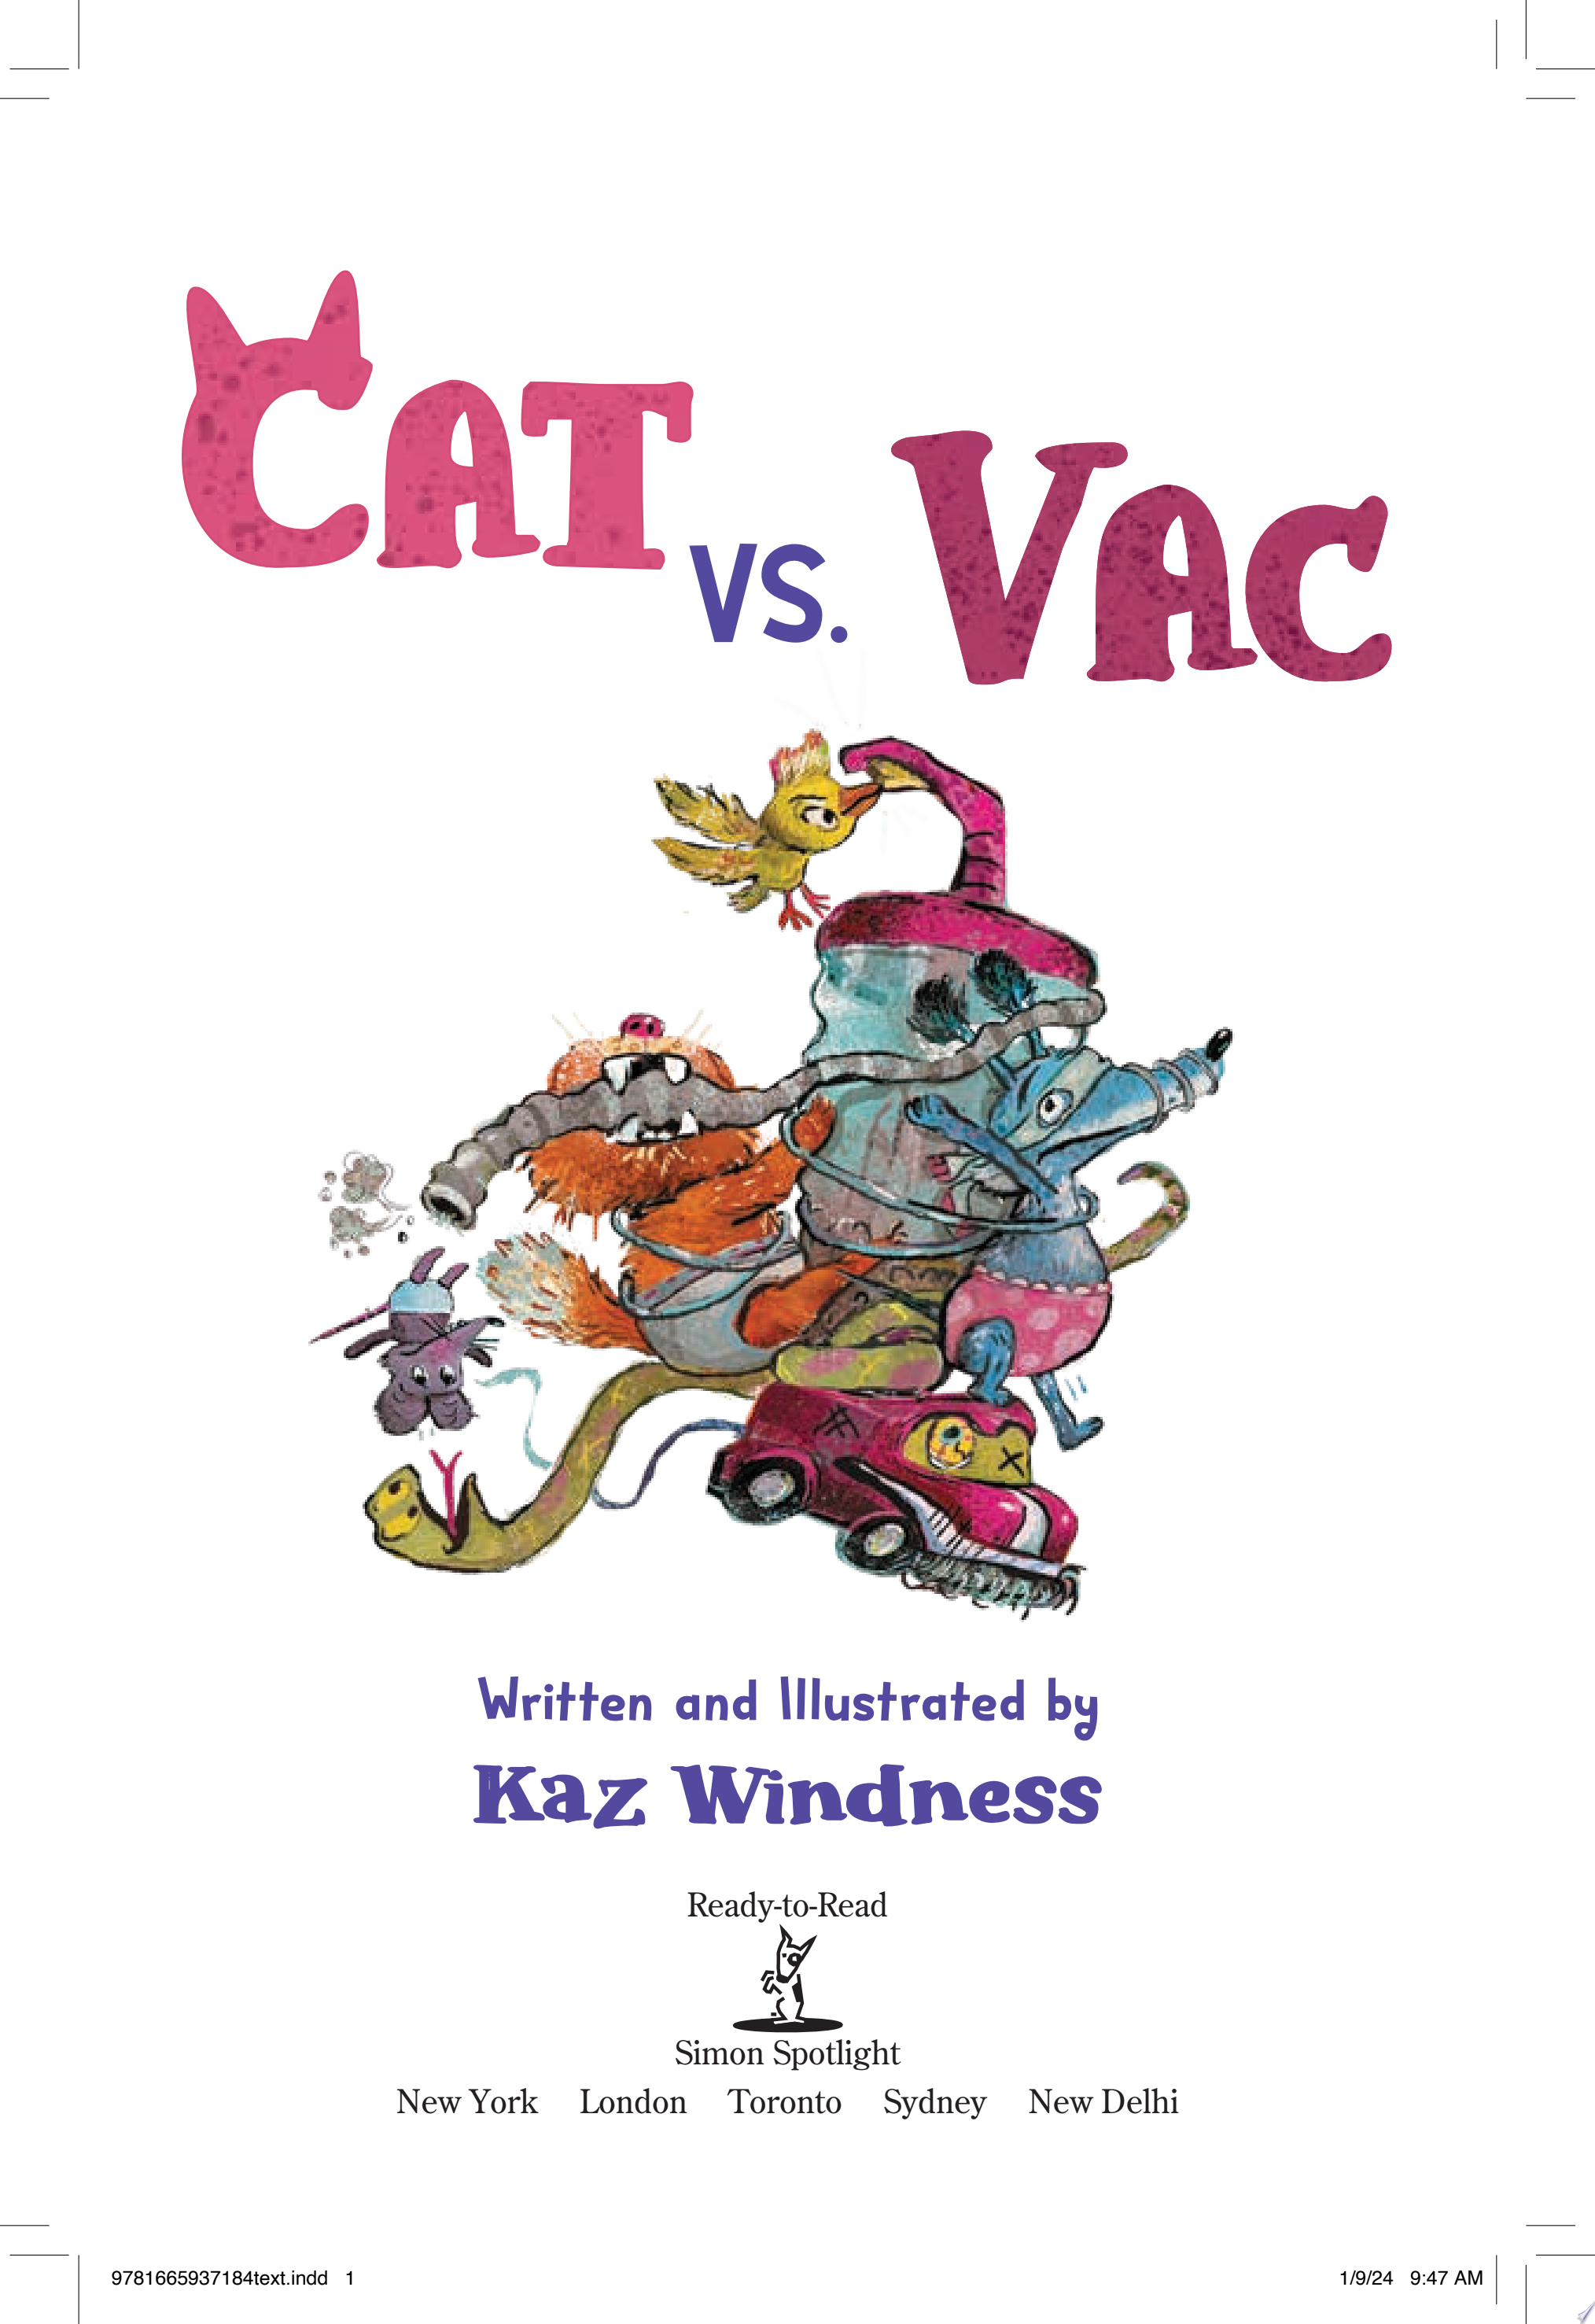 Image for "Cat Vs. Vac"